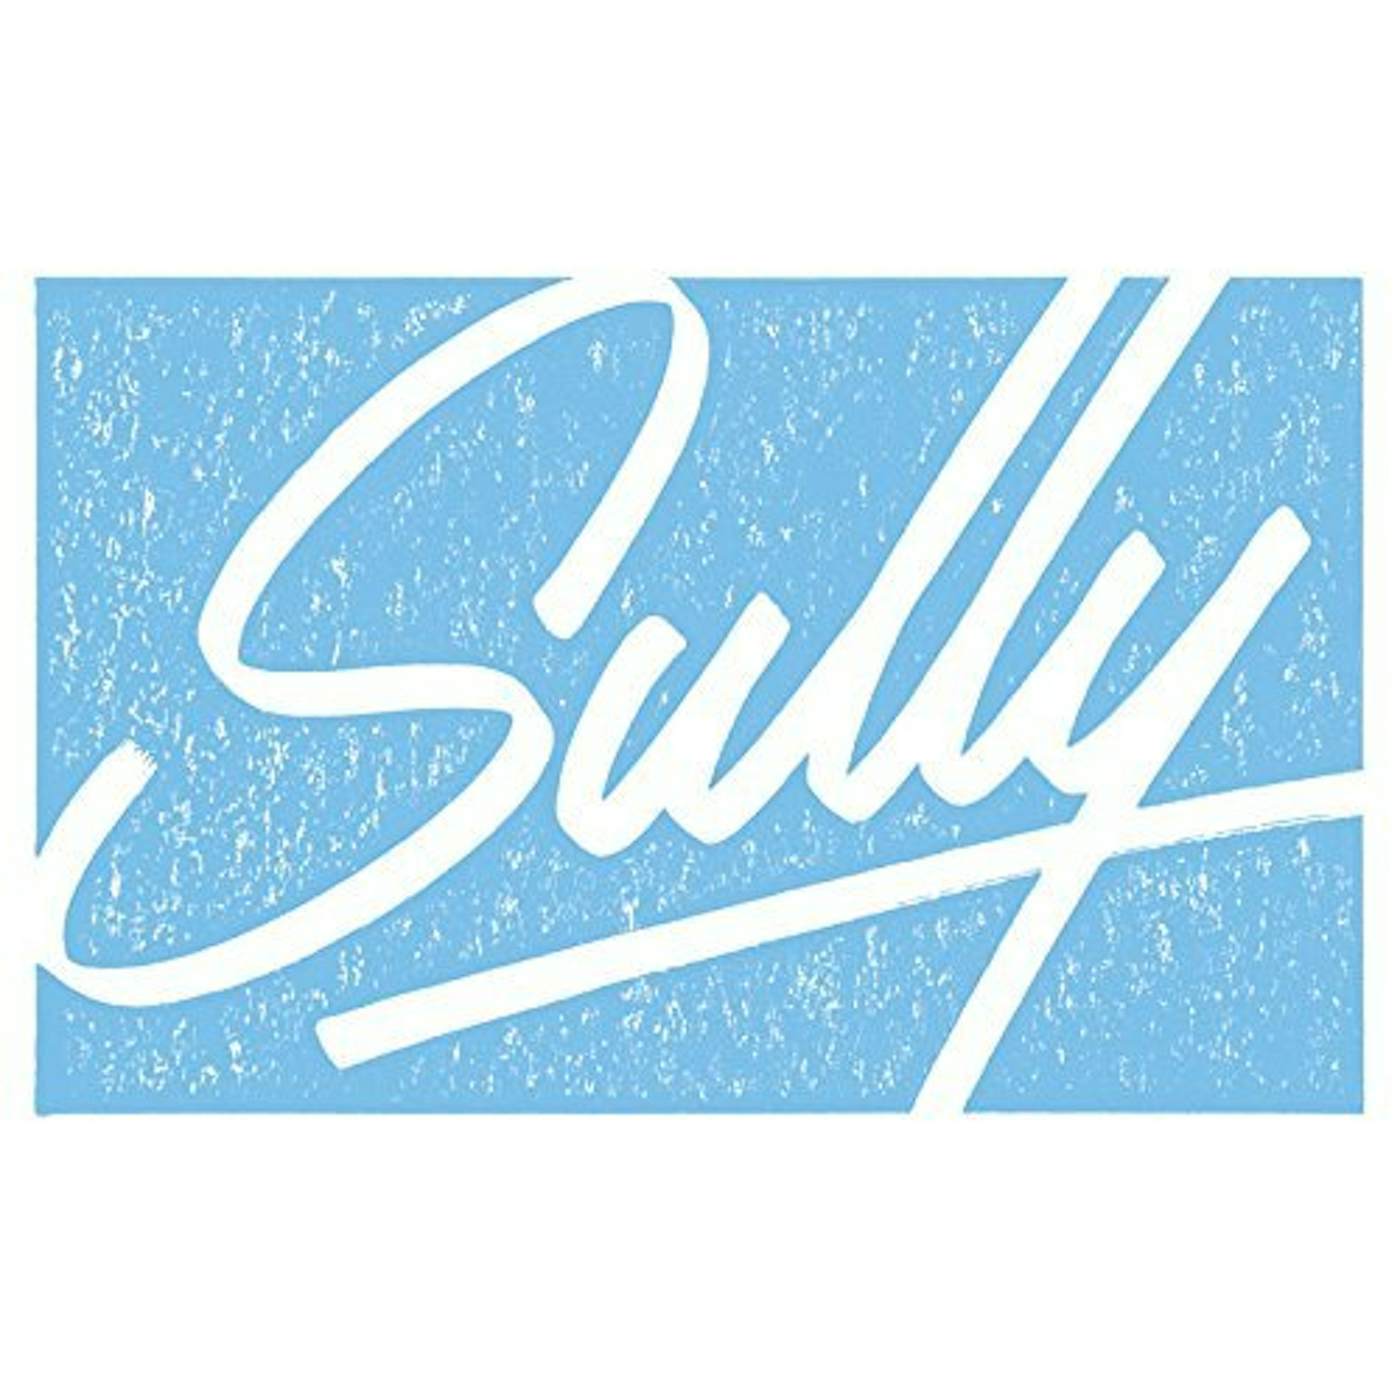 Sully Flock Vinyl Record